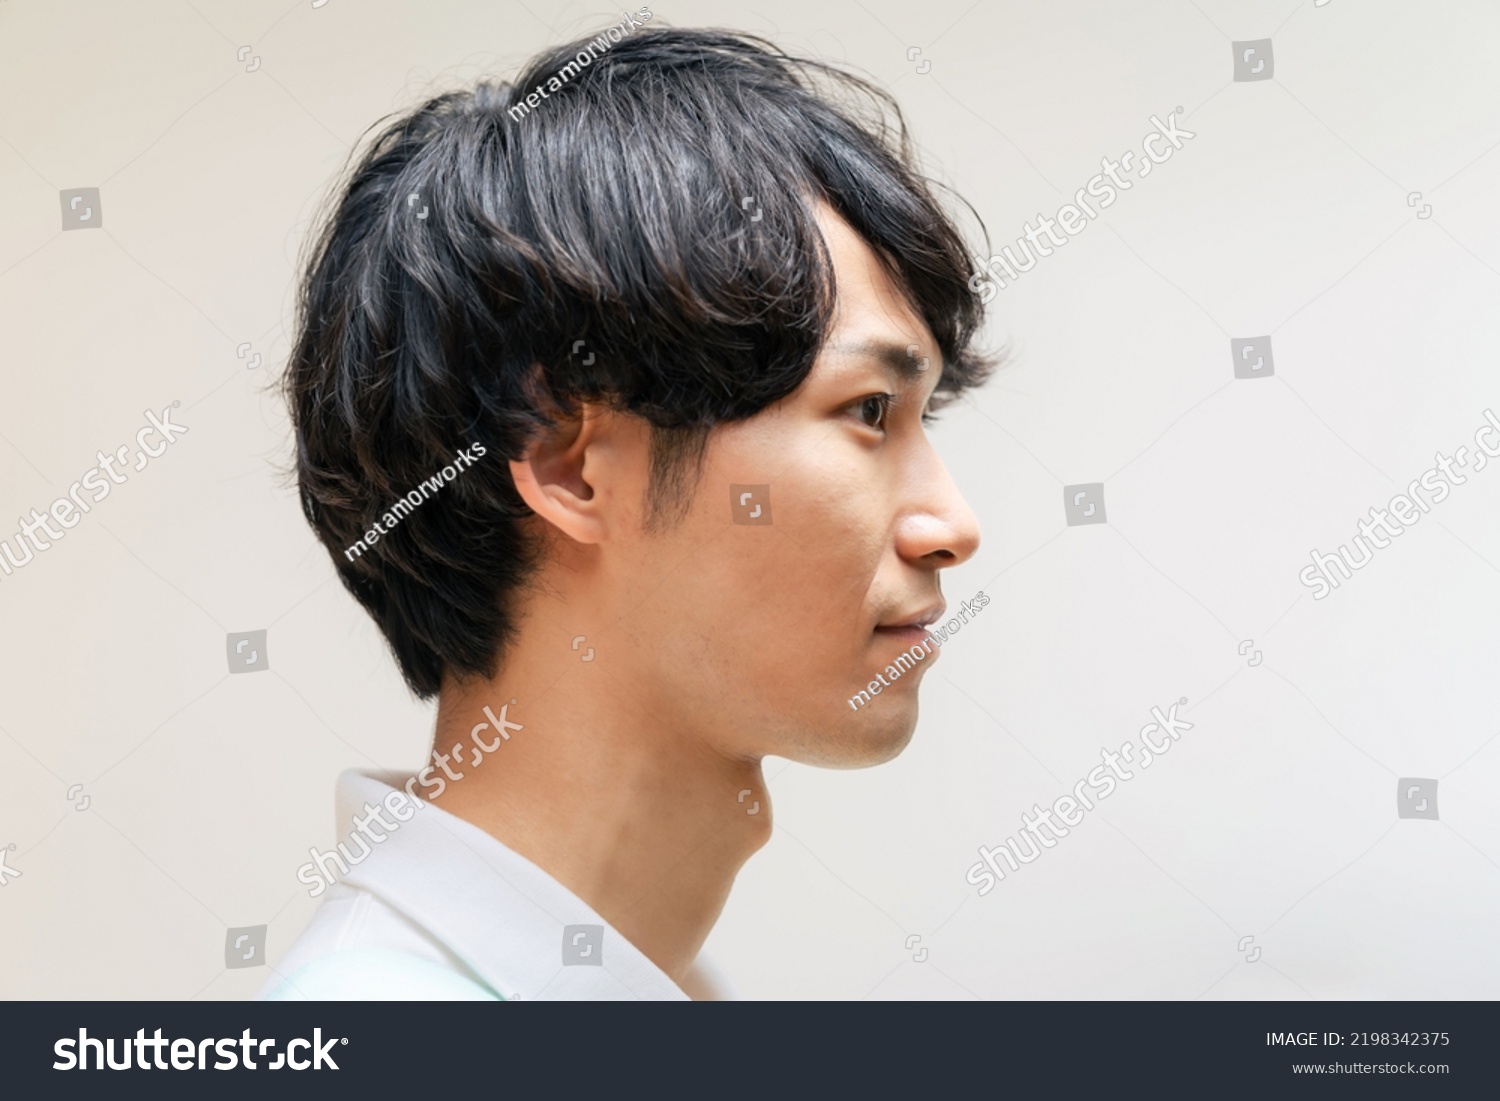 Profile of Asian man. Portrait. Side view. #2198342375